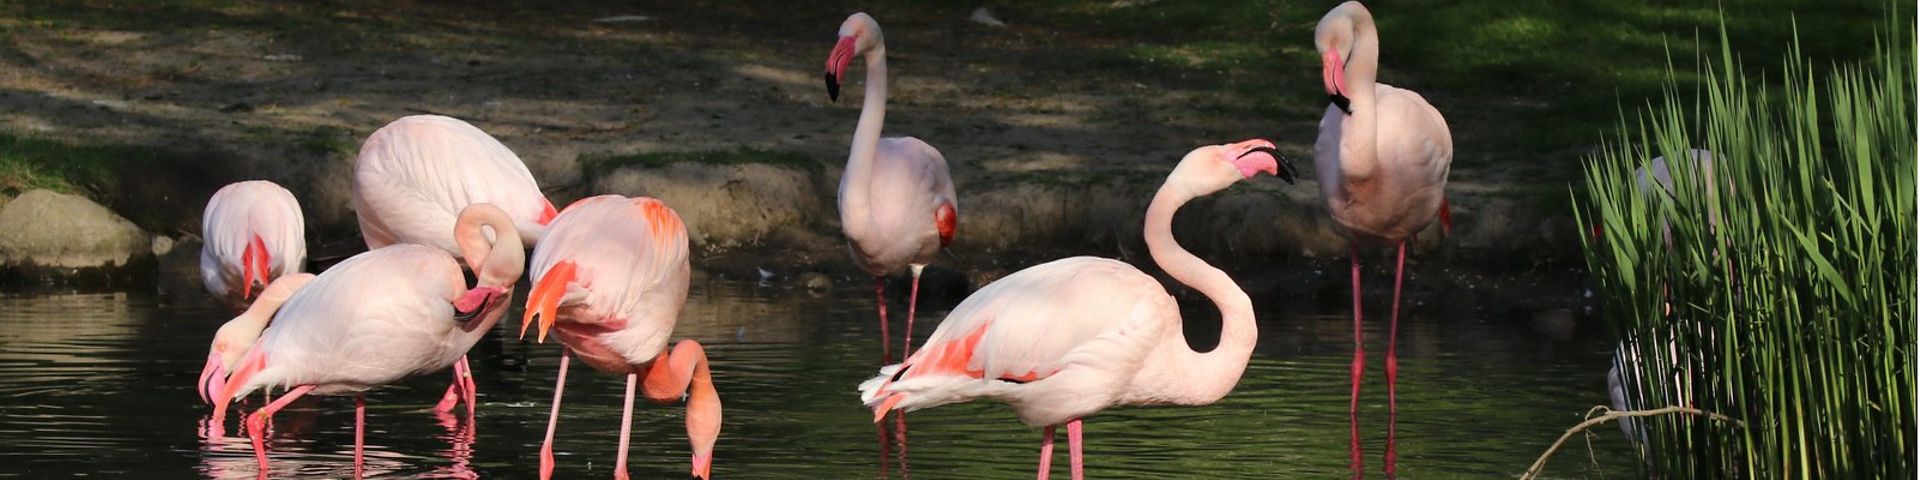 Aachener_Tierpark_Flamingos_Liz_lück